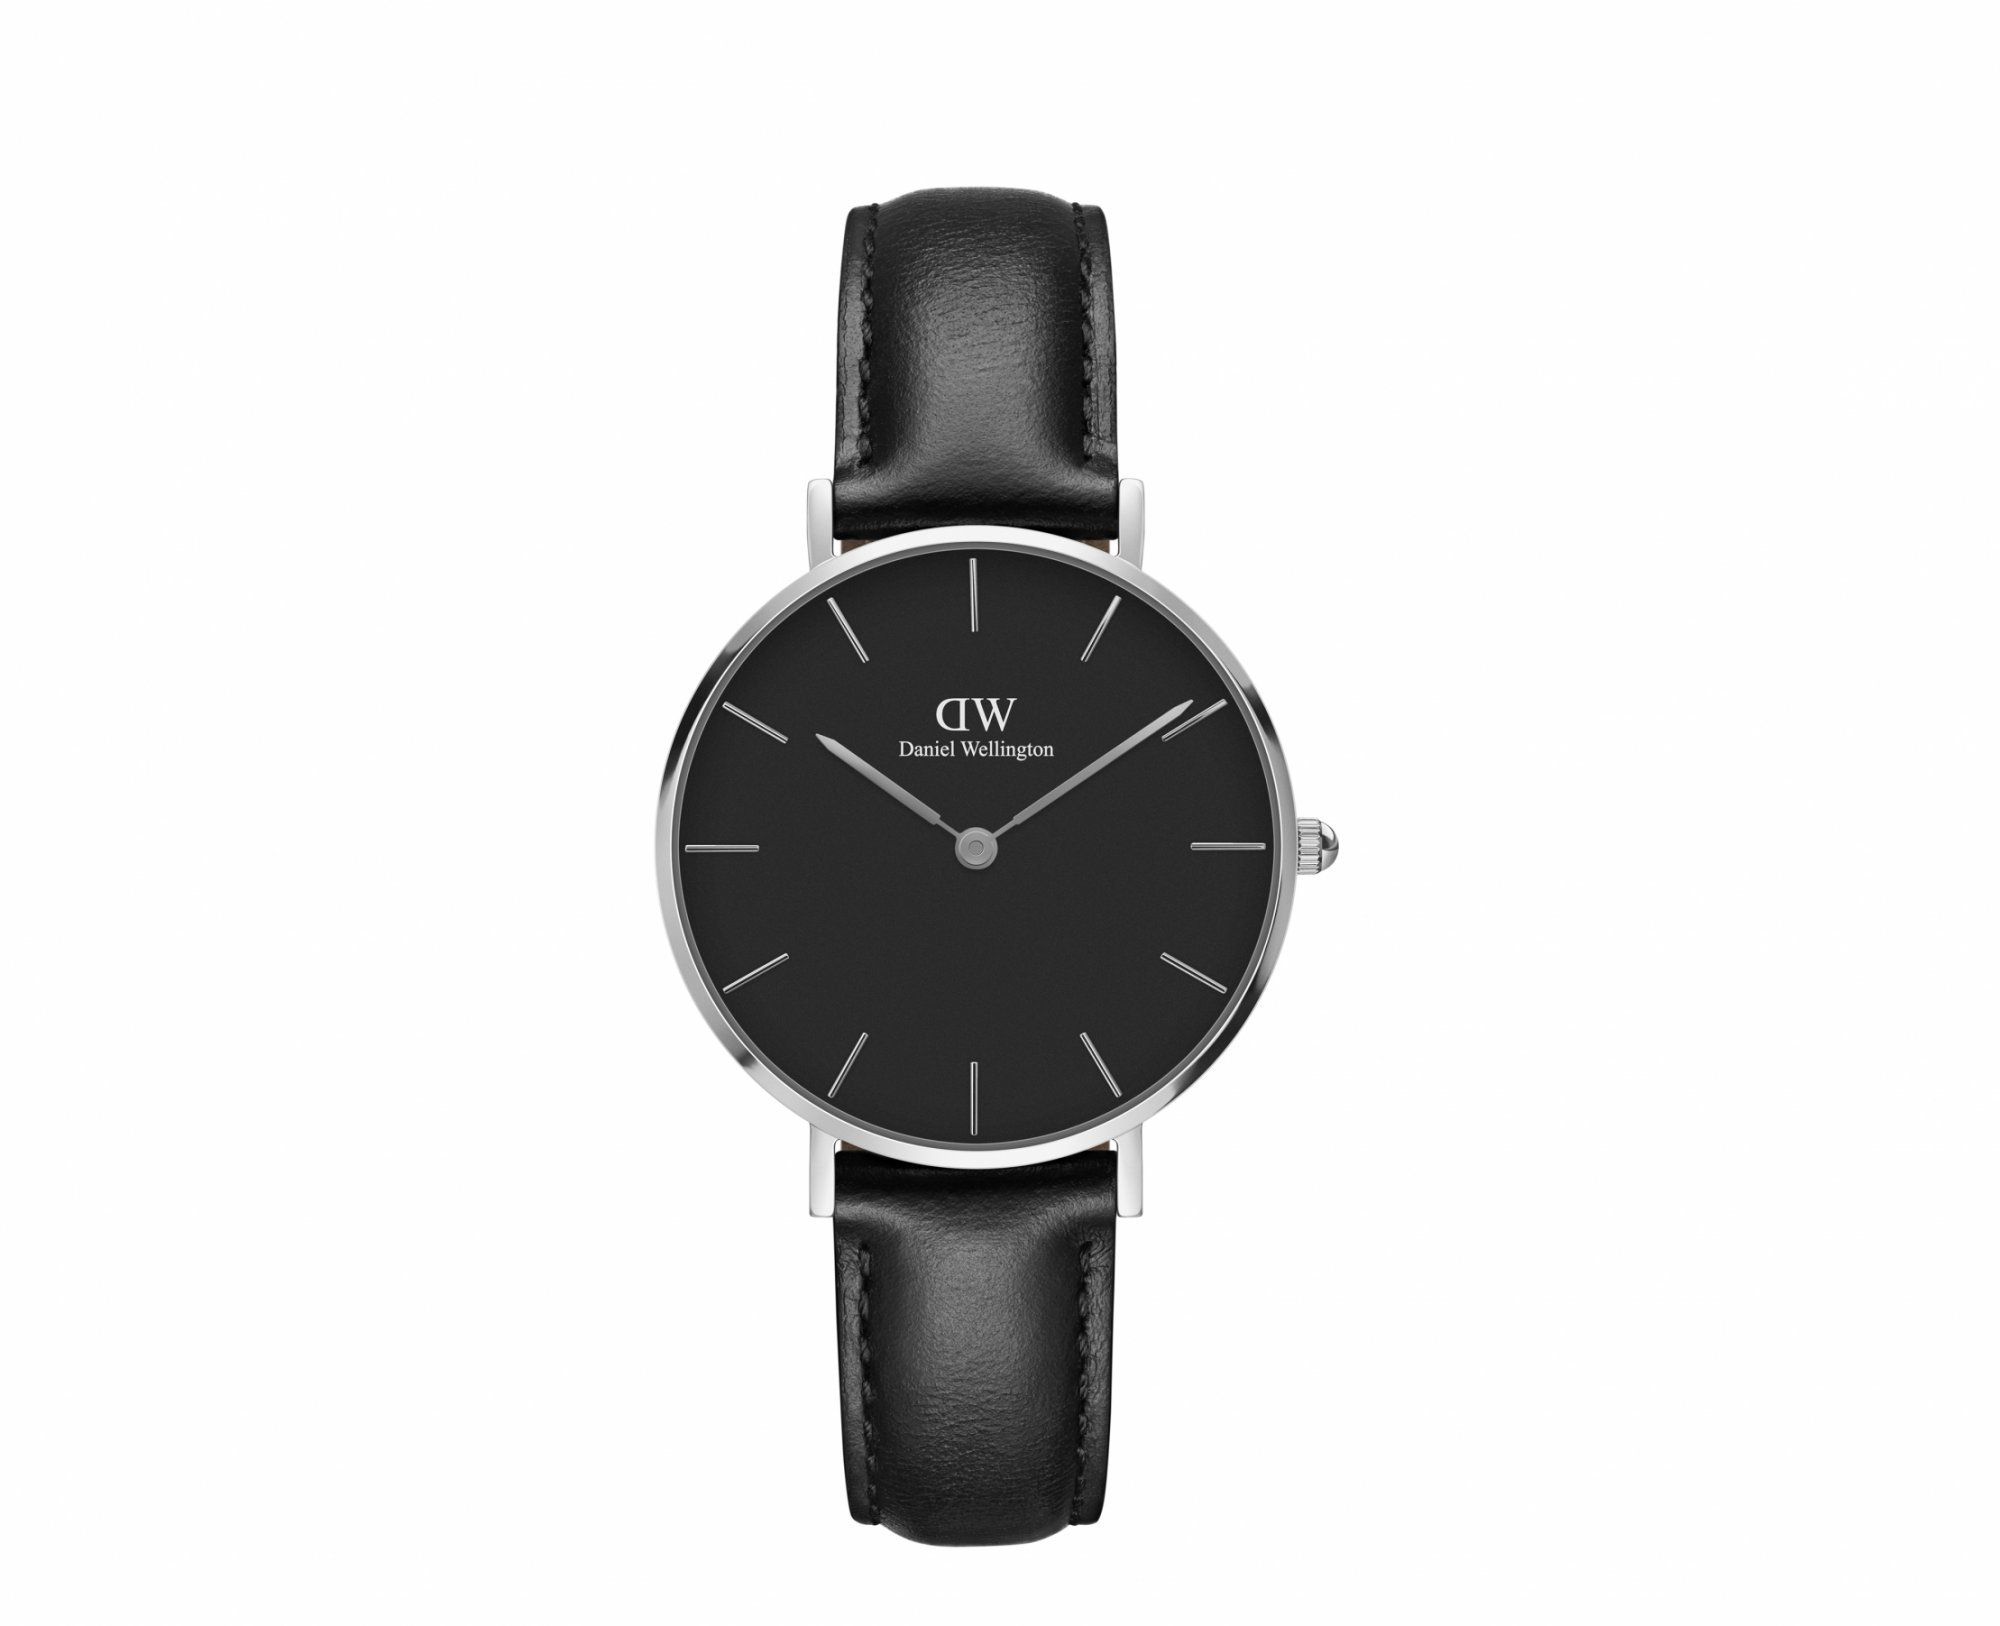 black watch